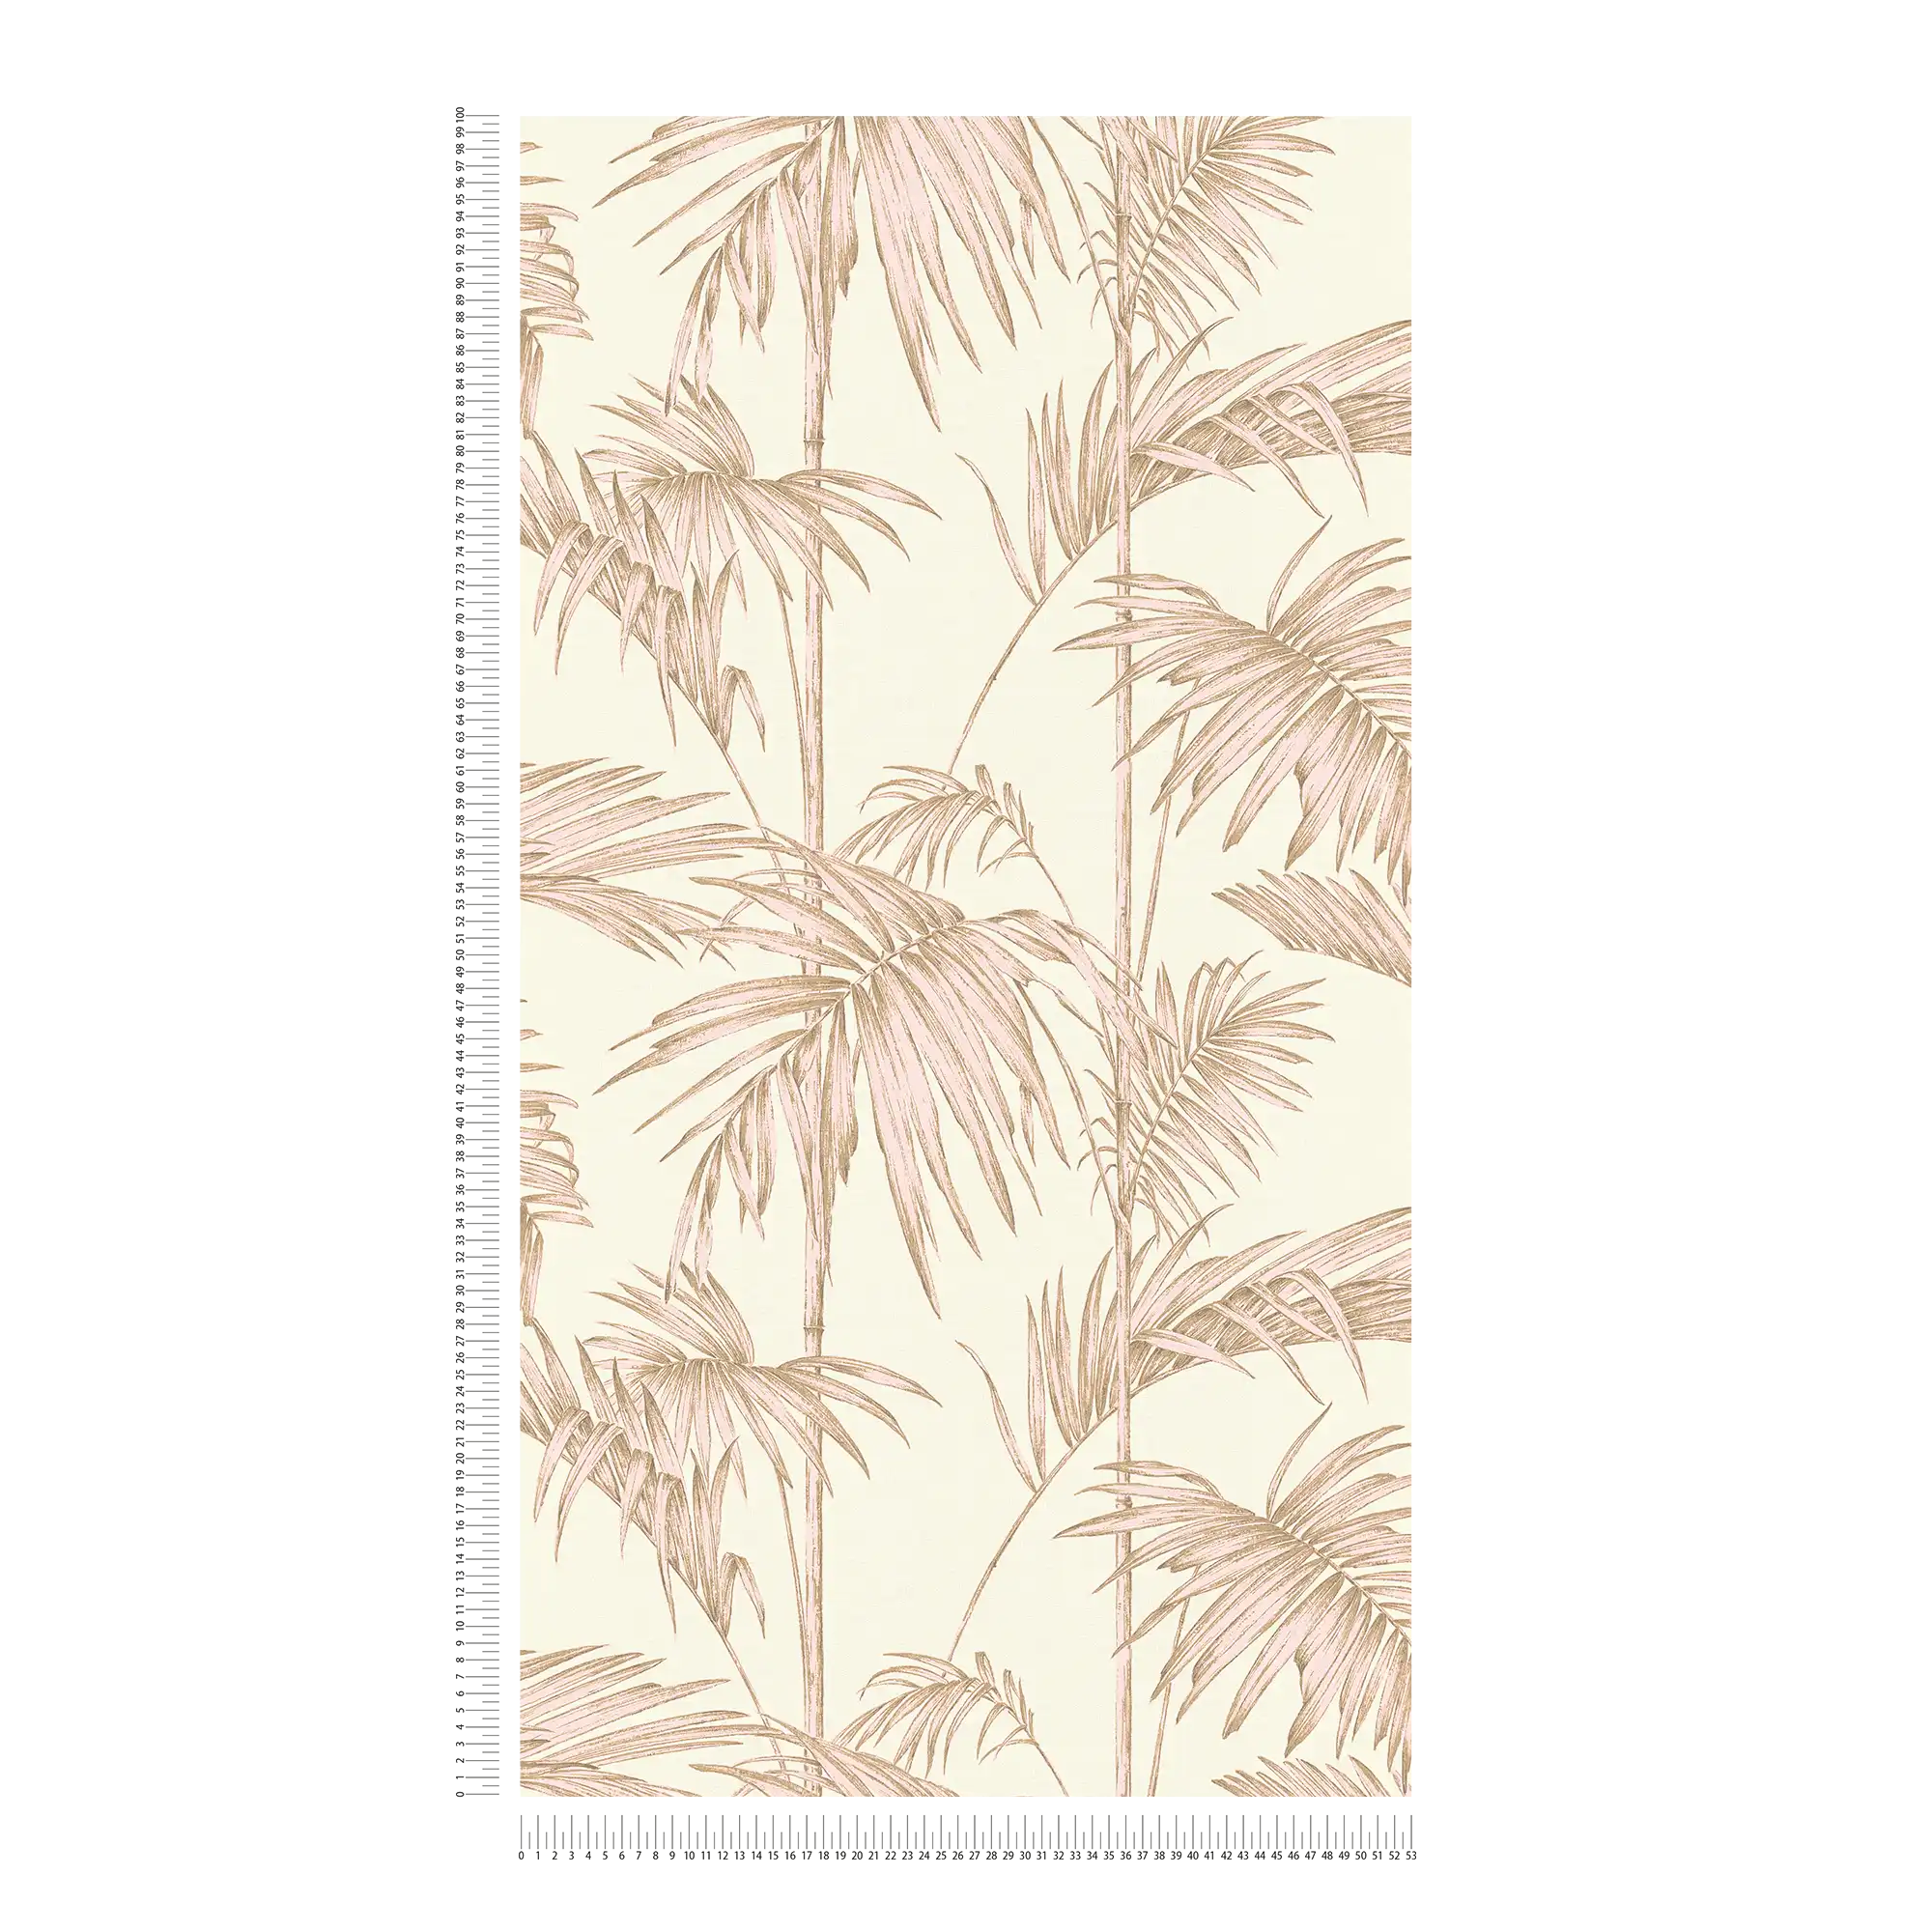             Papel Pintado Natural Hojas de Palma, Bambú - Rosa, Beige, Crema
        